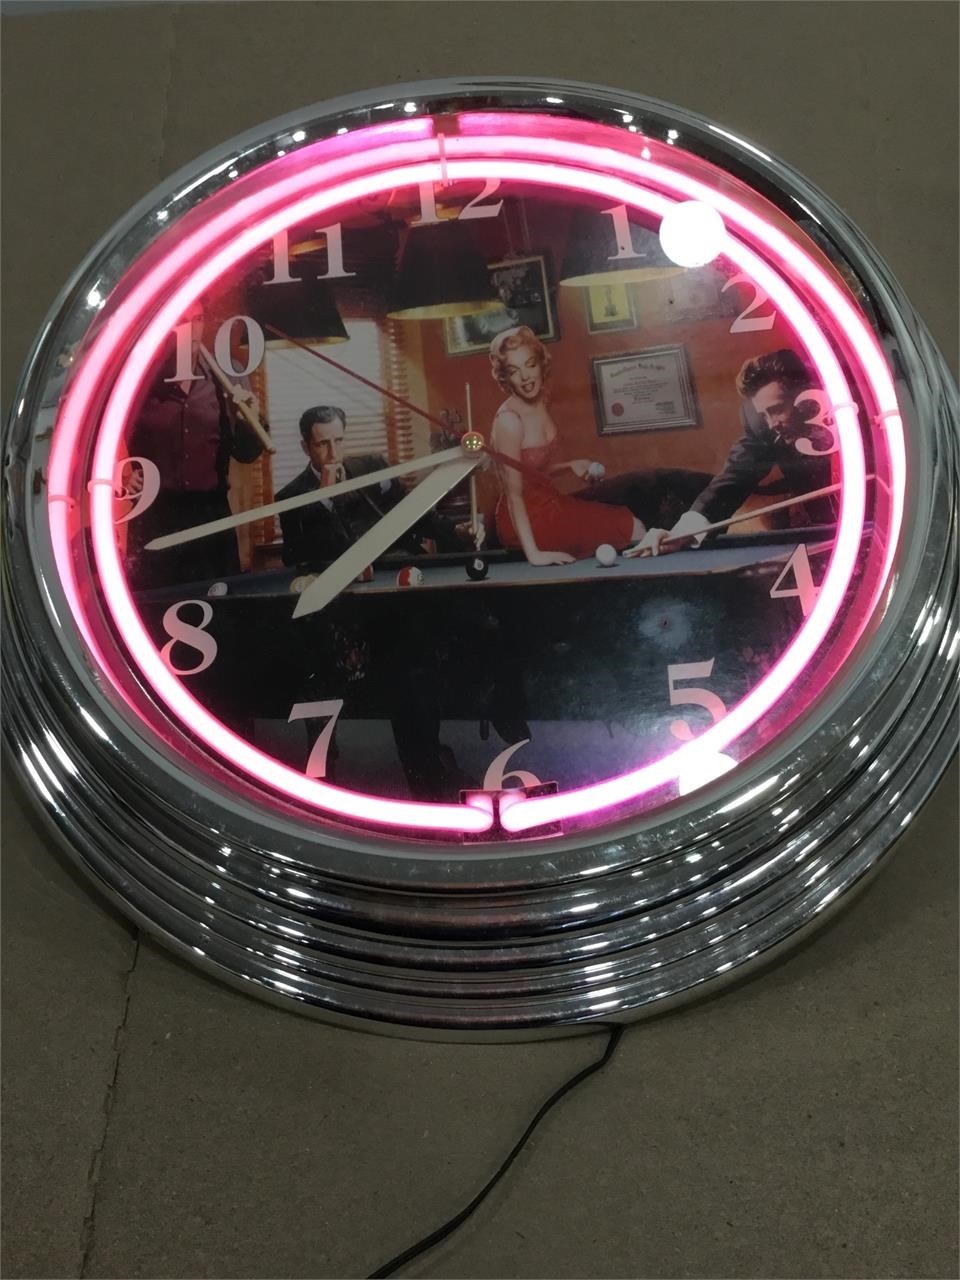 Vintage Neon Wall Clock w/Elvis, James Dean, etc.